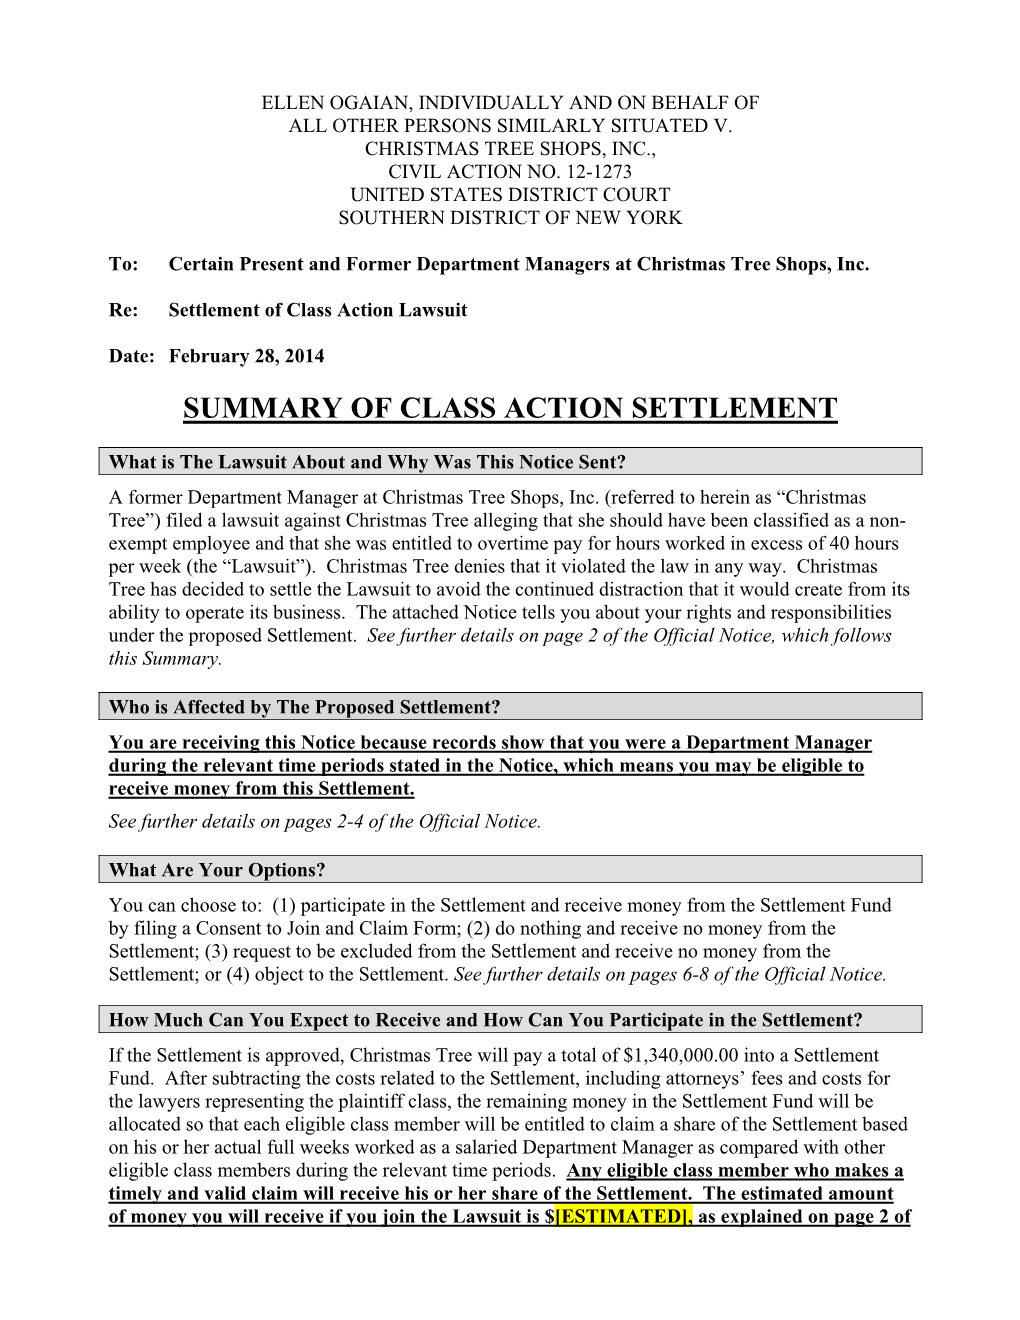 Summary of Class Action Settlement